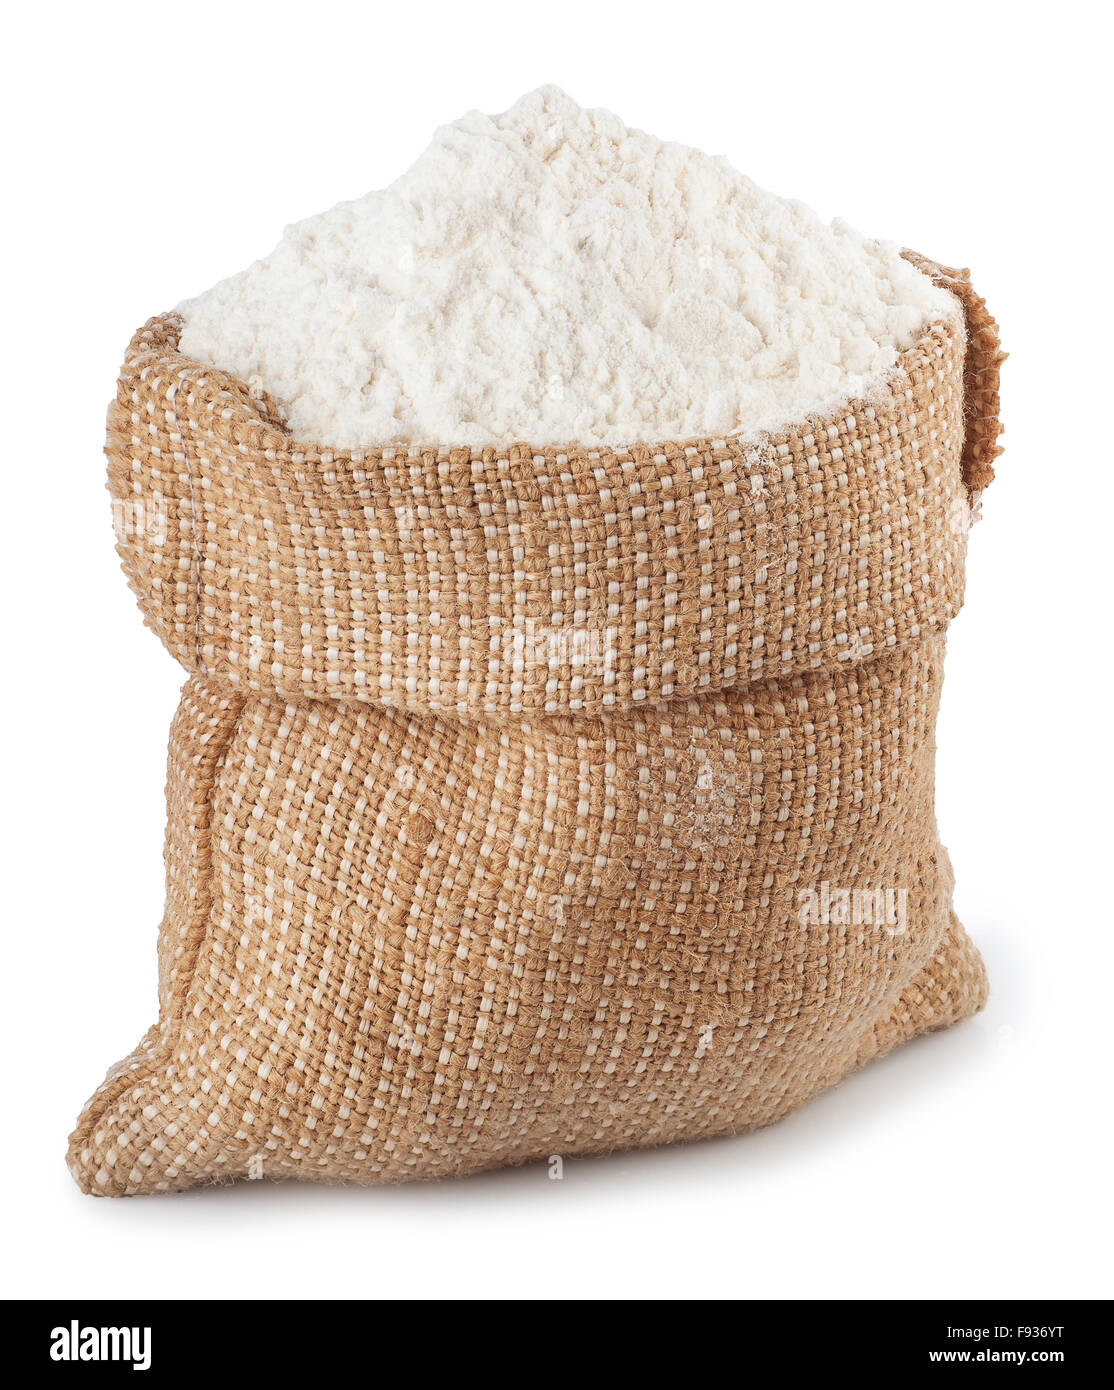 flour in burlap sack isolated on white background Stock Photo